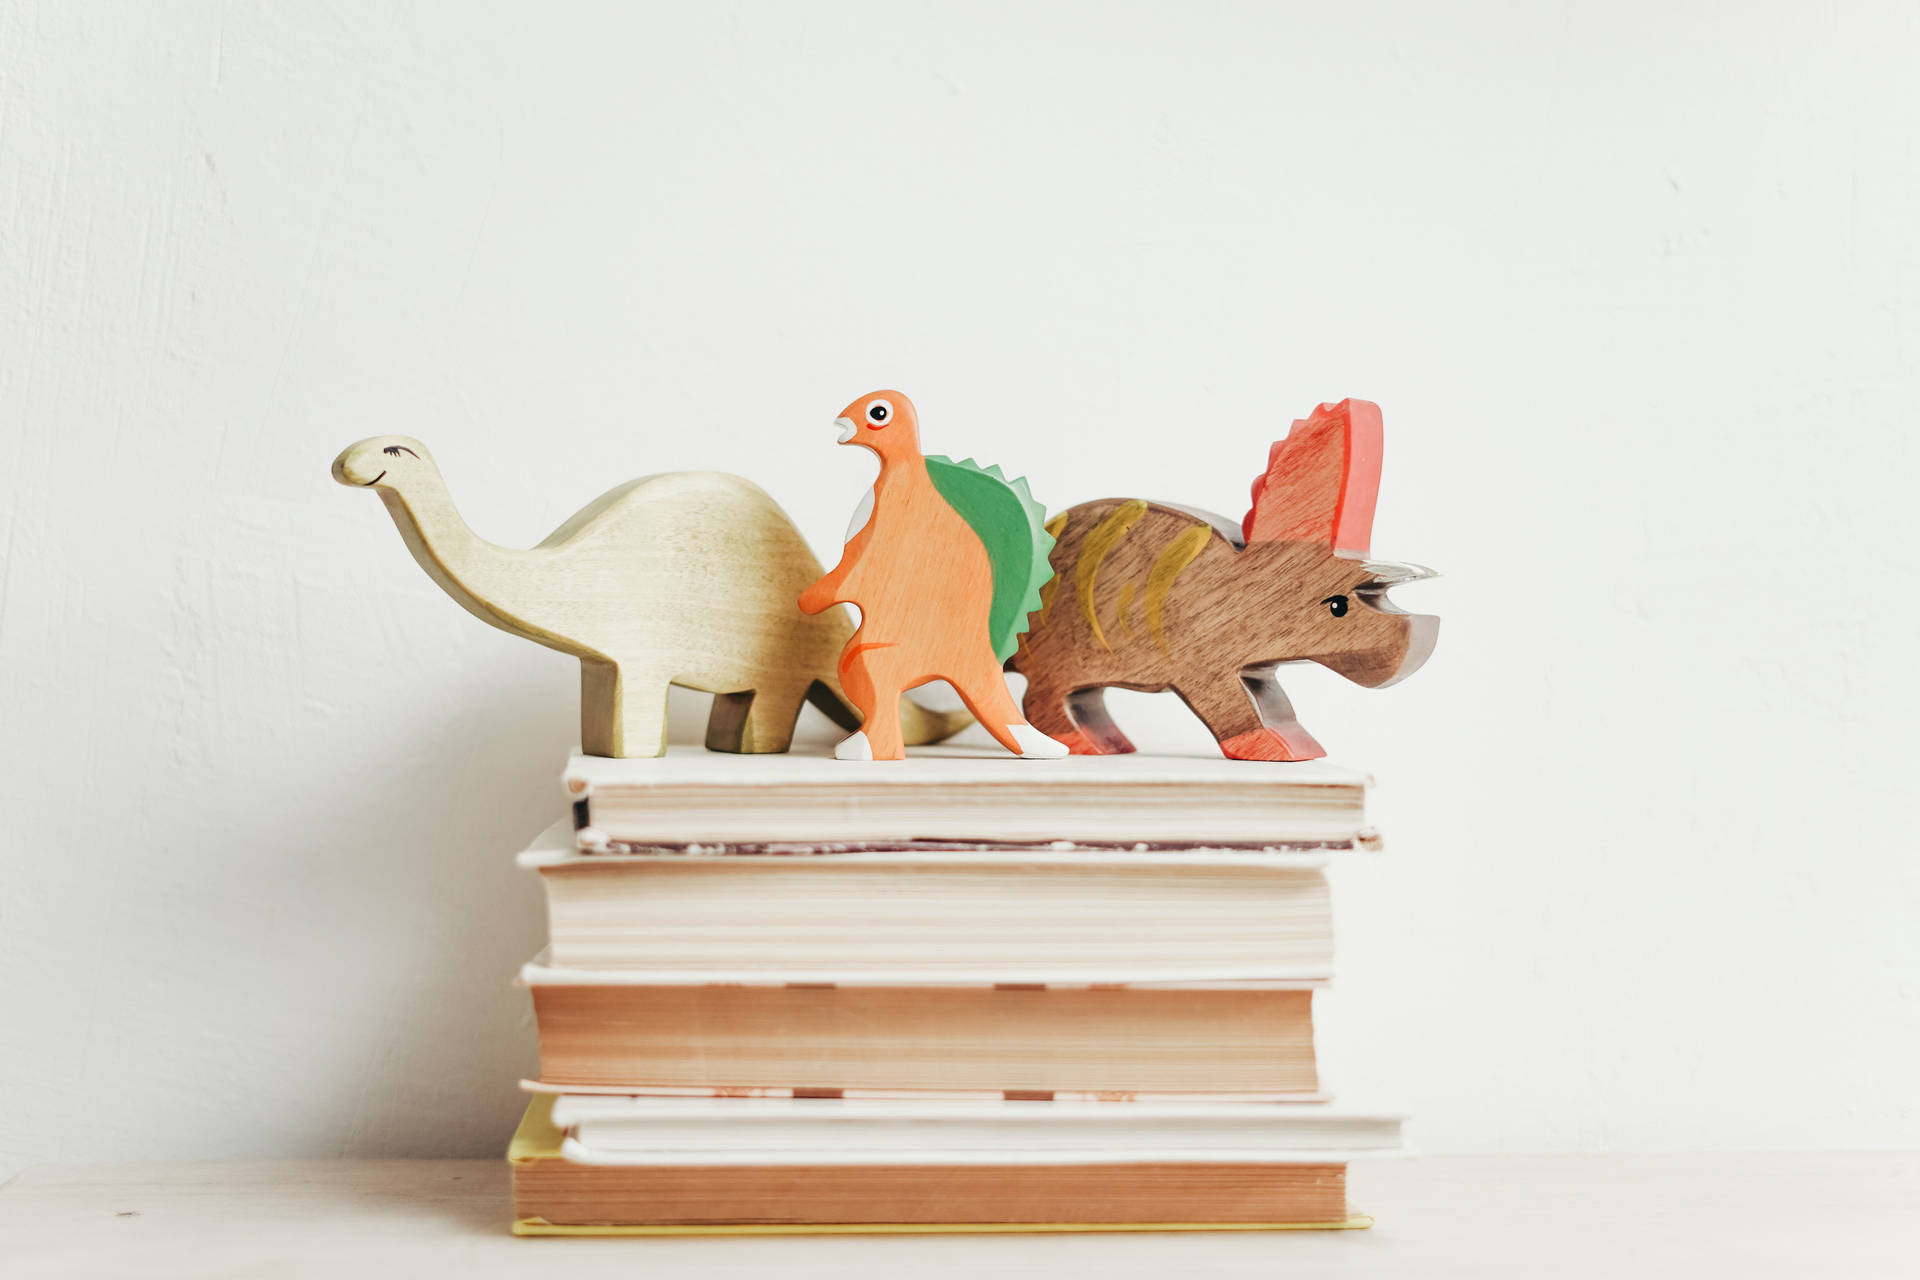 Studiemotivation Dinosaurfigurer på bogbaggrund er et maleri. Wallpaper